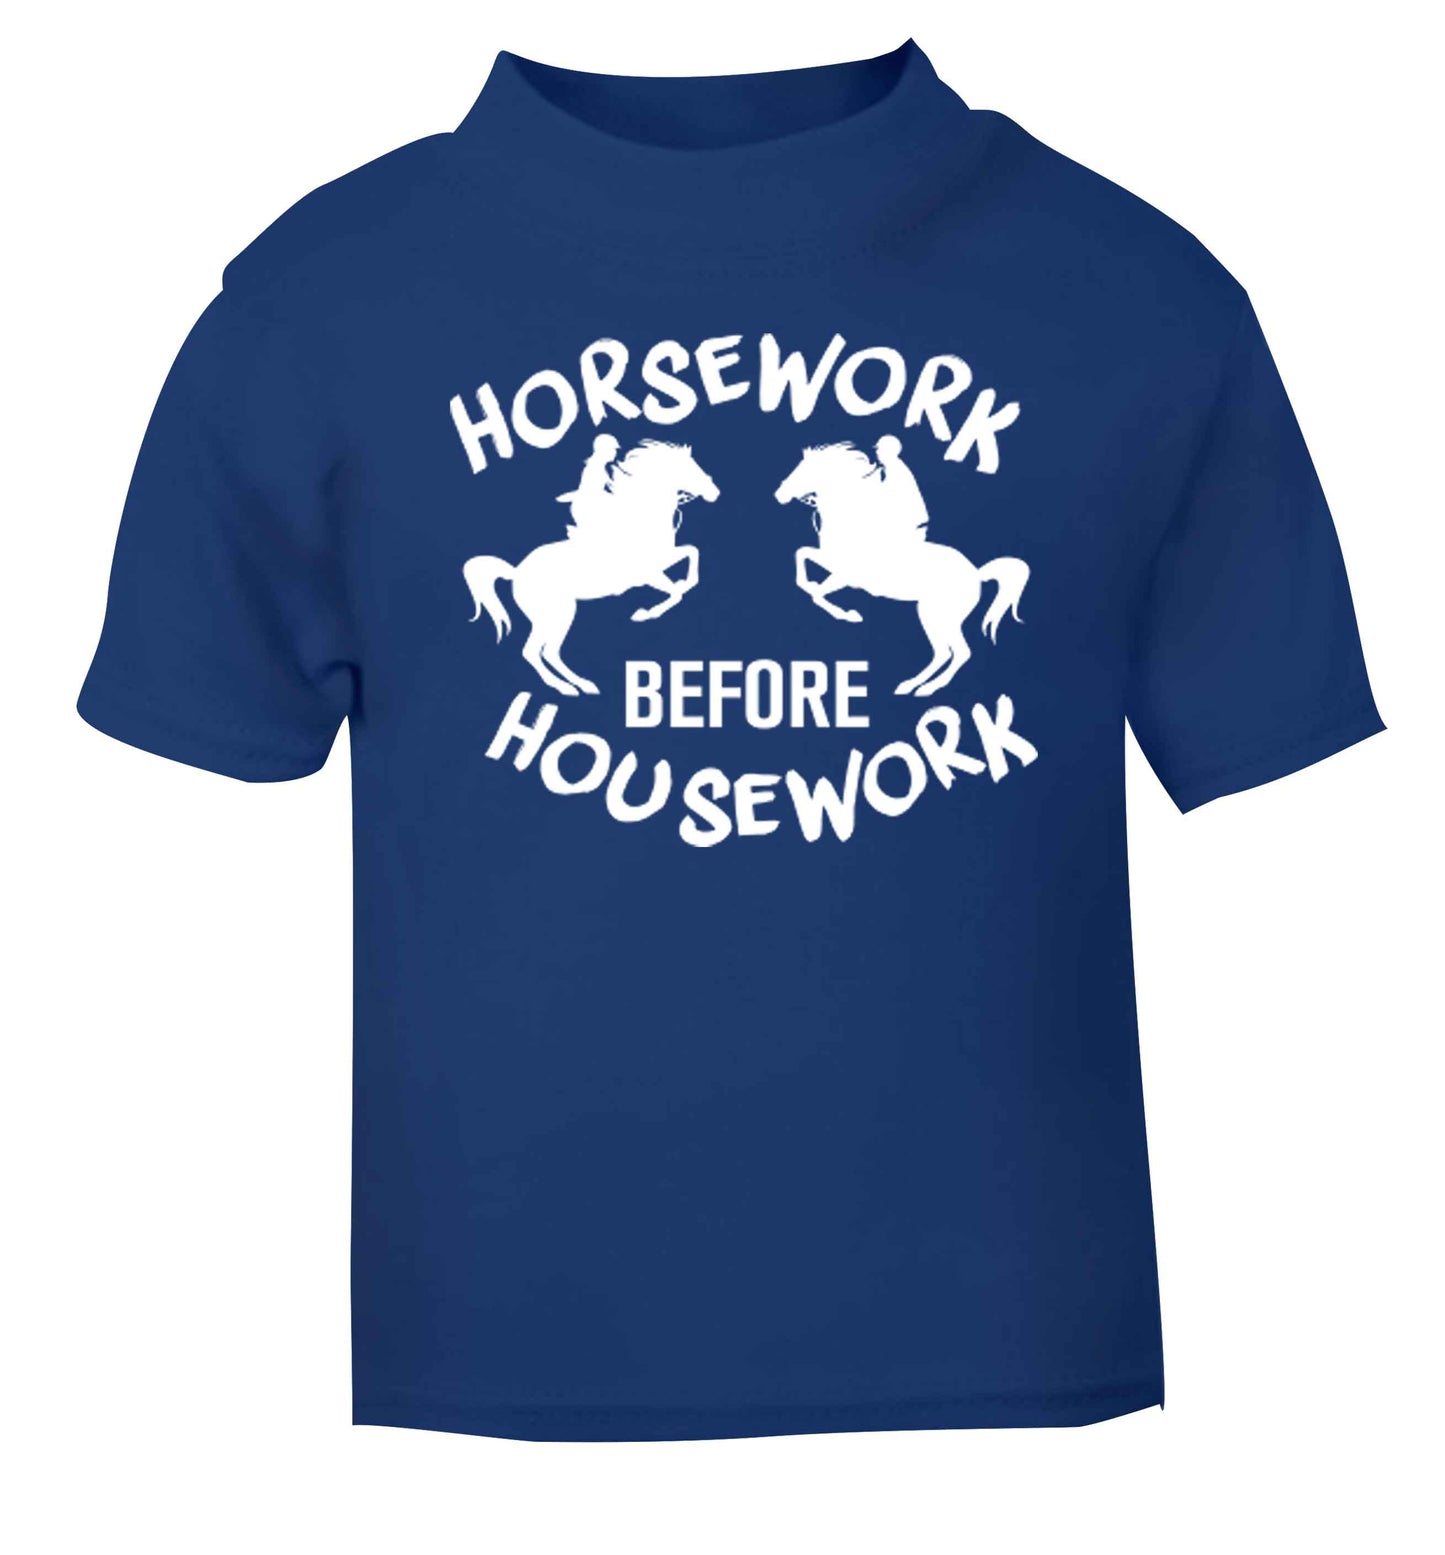 Horsework before housework blue baby toddler Tshirt 2 Years